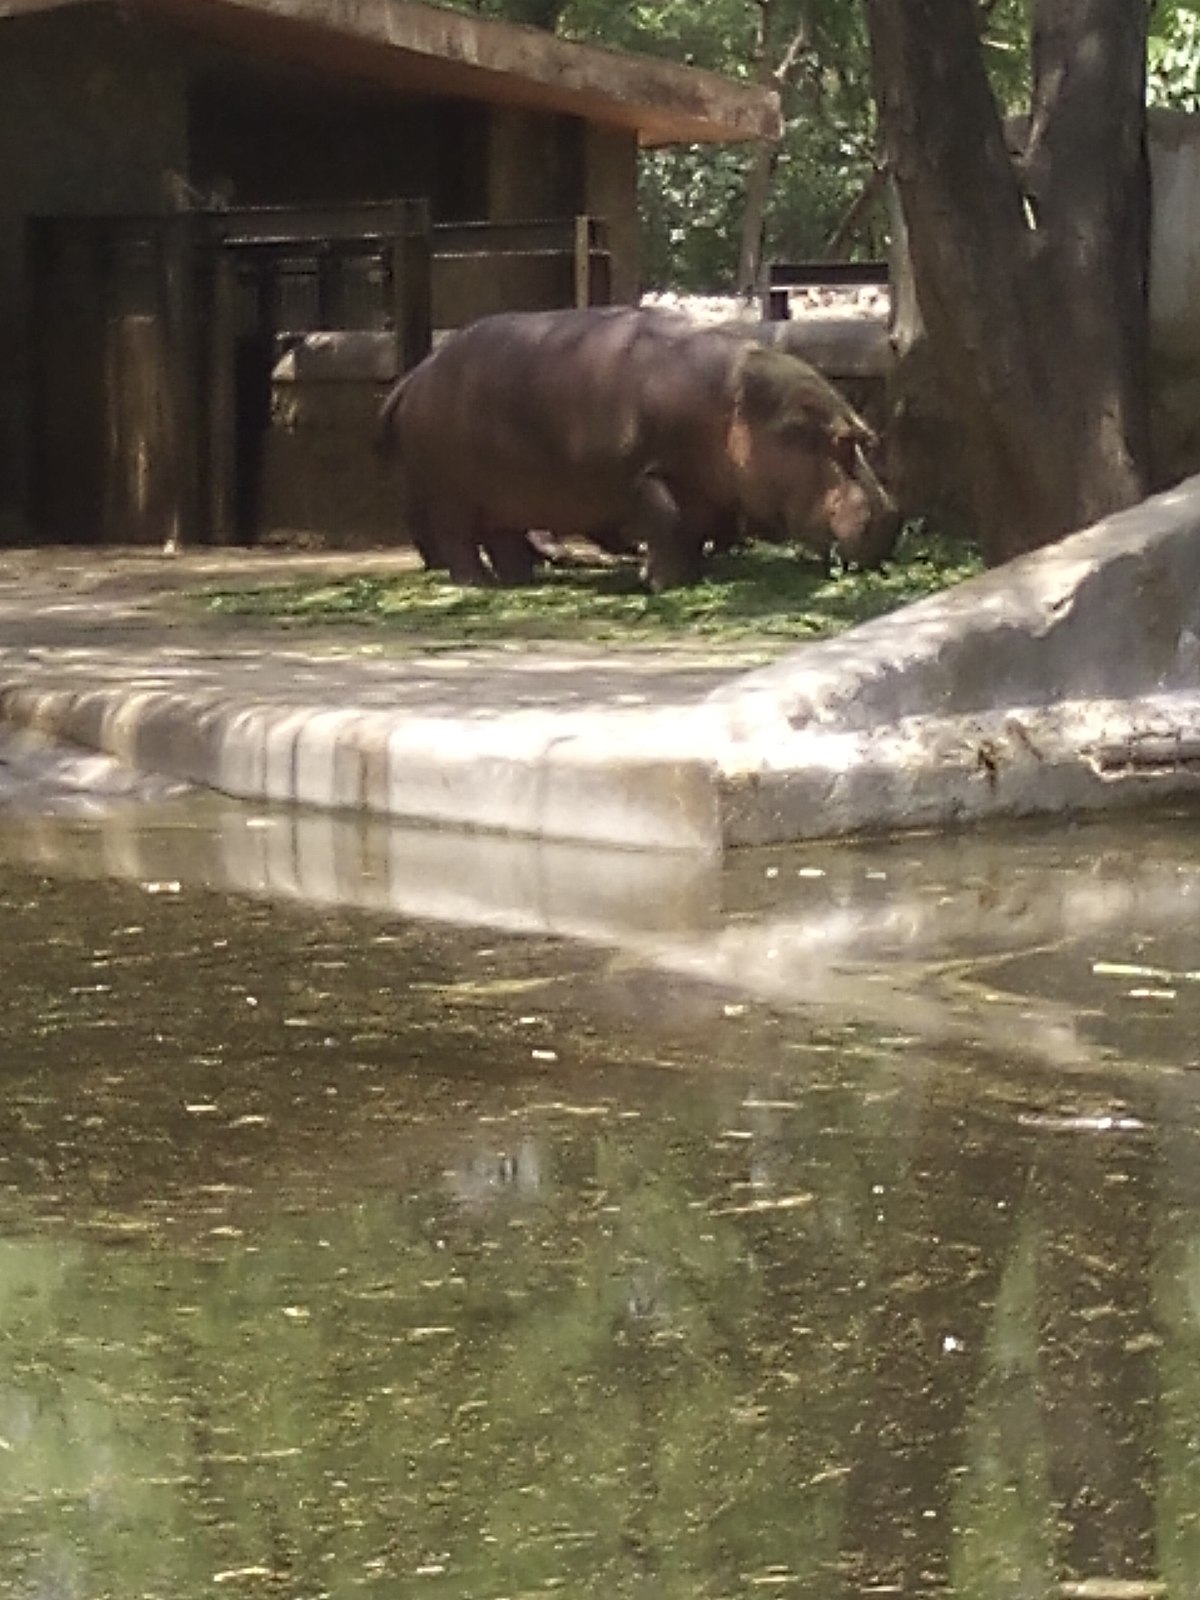 https://upload.wikimedia.org/wikipedia/commons/thumb/7/7c/Hippopotamus%2C_National_Zoological_Park.jpg/1200px-Hippopotamus%2C_National_Zoological_Park.jpg